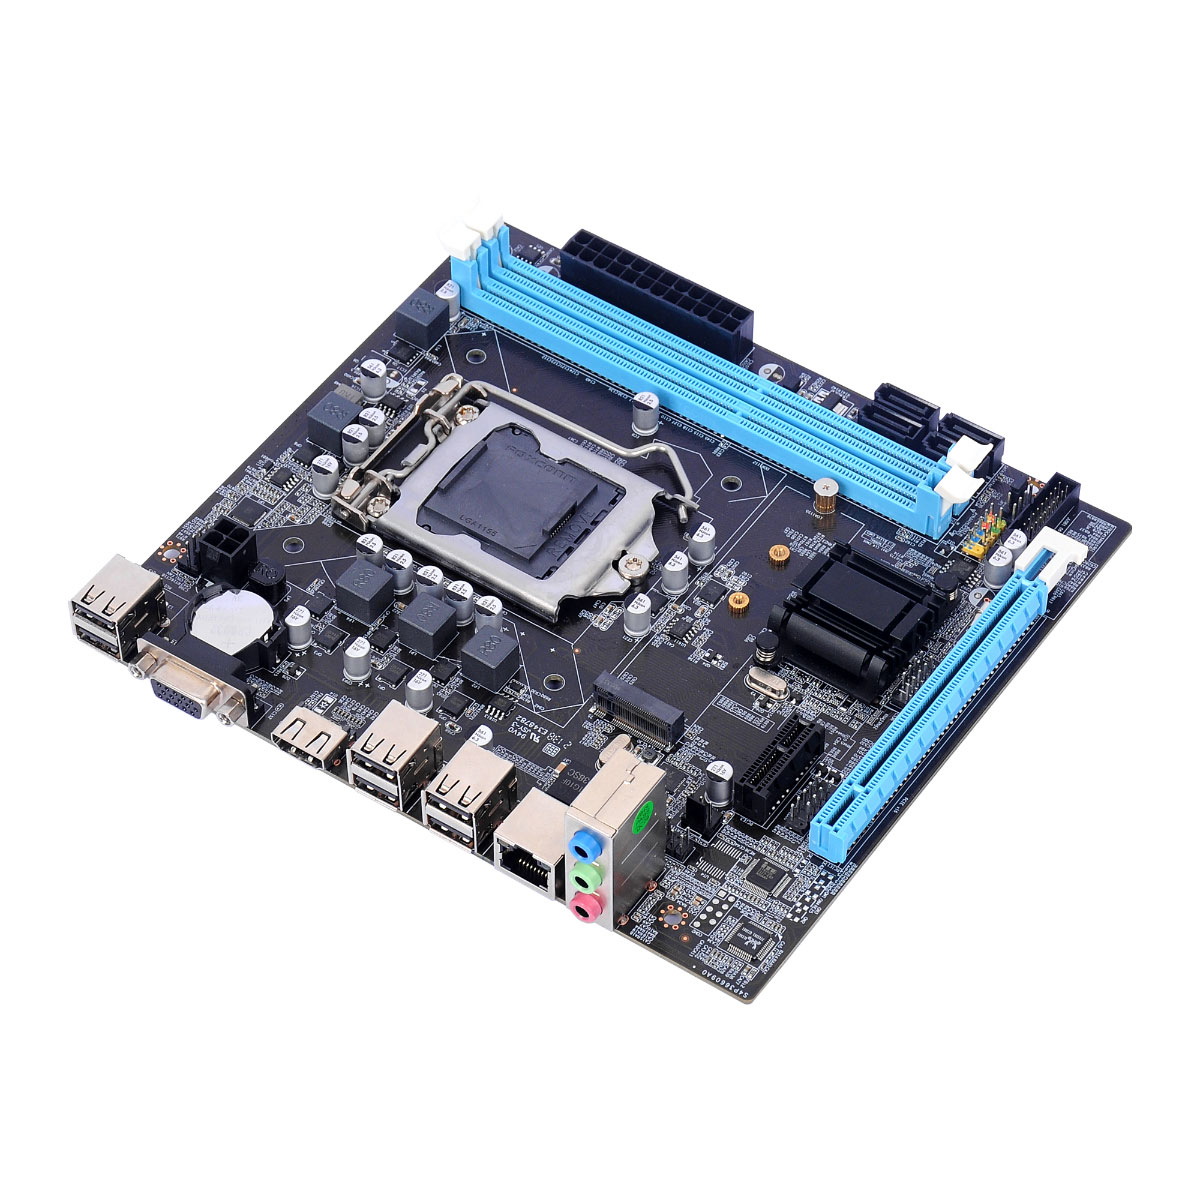 Placa Mãe Bluecase BMBH61-G2HG-M2 REV 2.0 - (LGA 1155 DDR3) - Chipset Intel H61 - Slot M.2 - Micro ATX - OEM